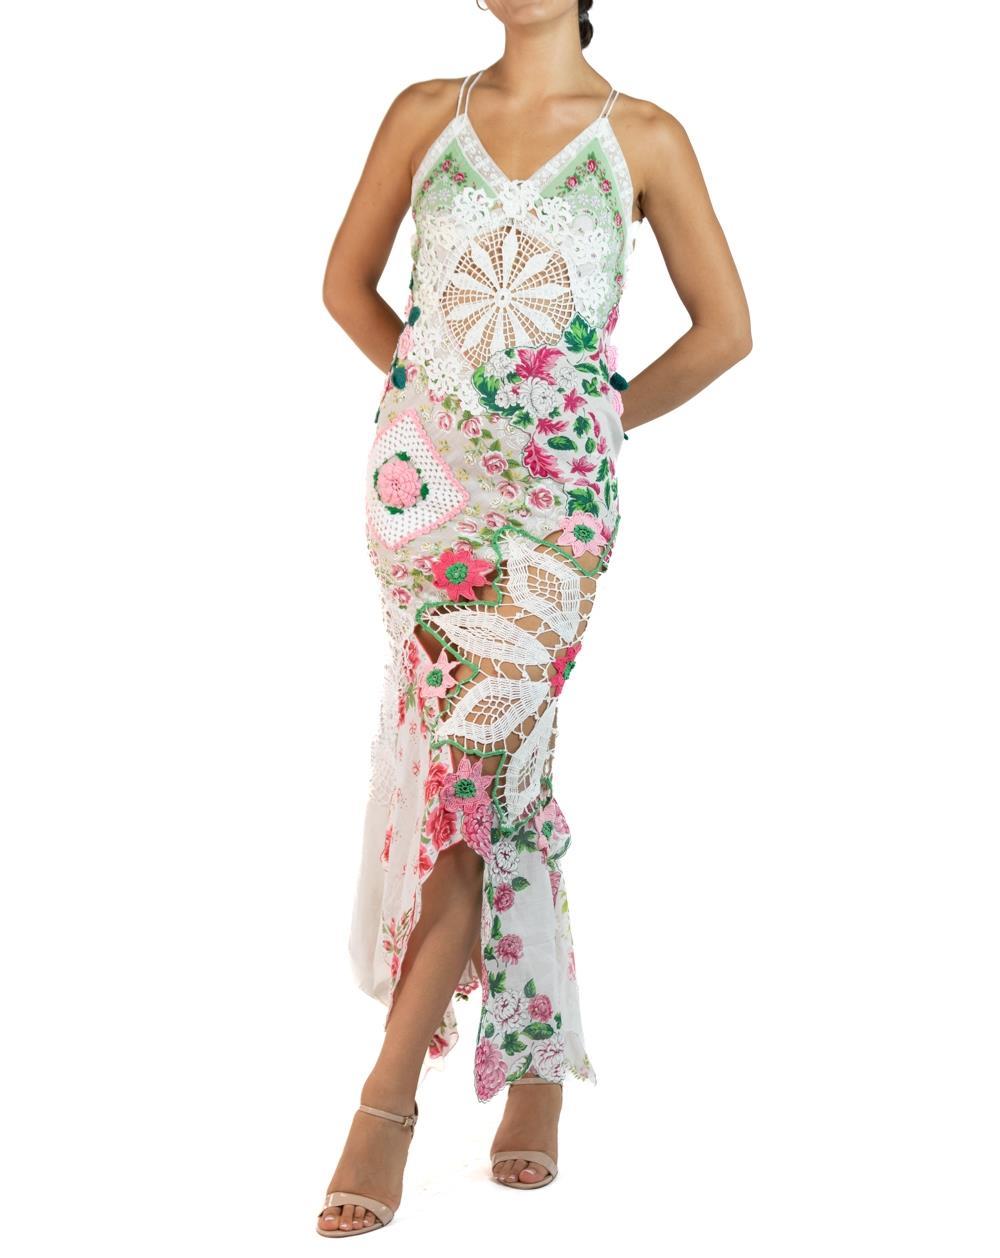 Women's Morphew Collection White, Pink & Green Cotton Crochet Long Vintage Doily Dress 